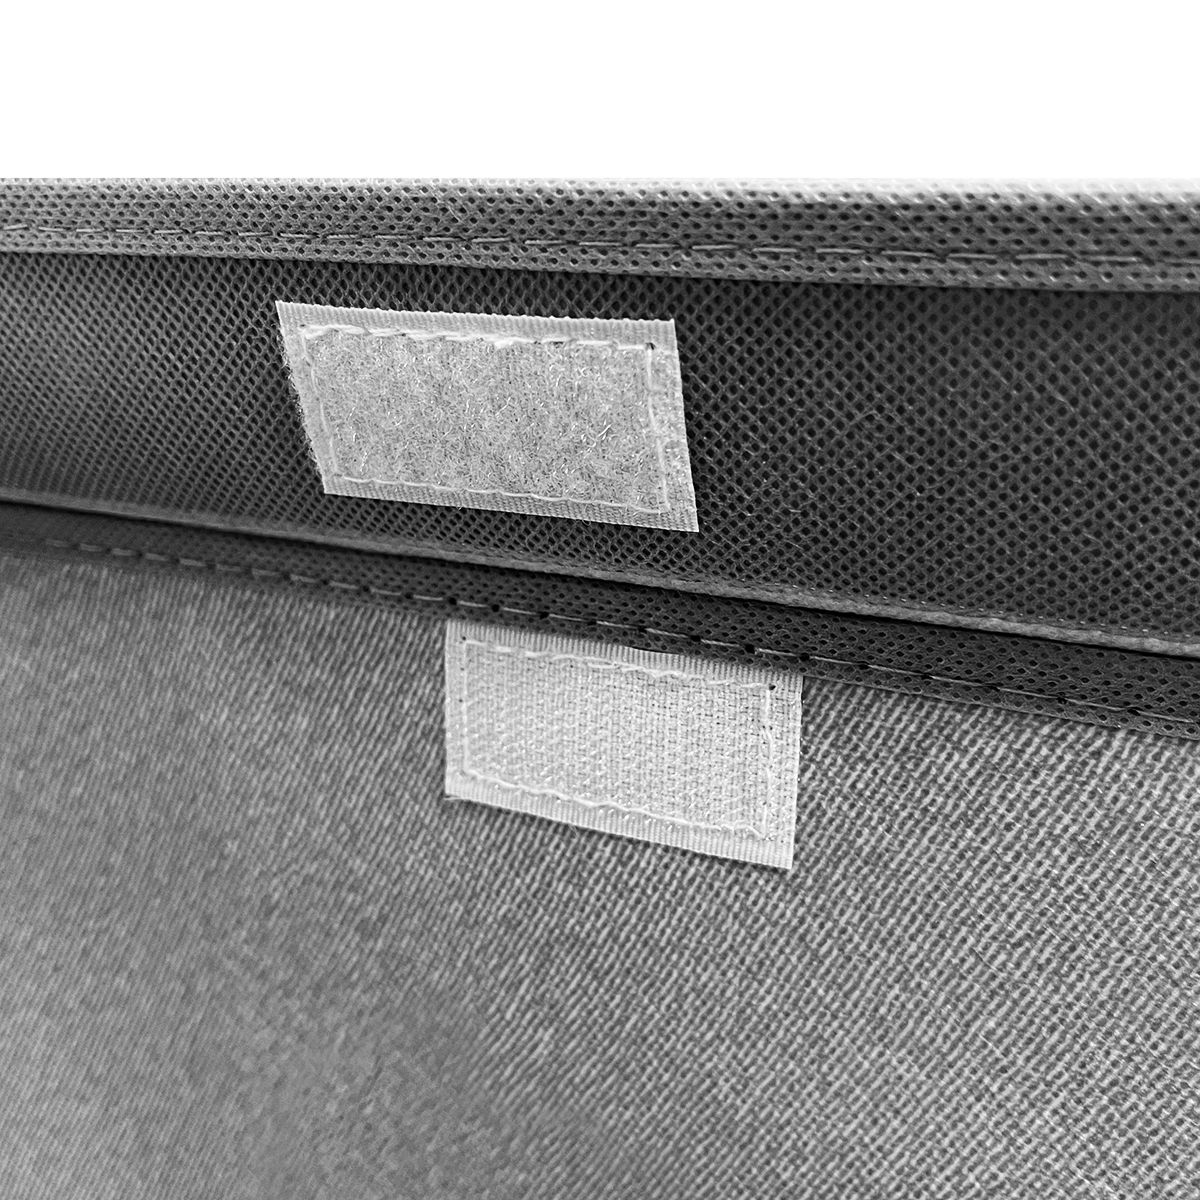 Ящик для хранения с крышкой МВМ My Home L текстильный, 440х290х280 мм, серый (TH-07 L GRAY) - фото 2